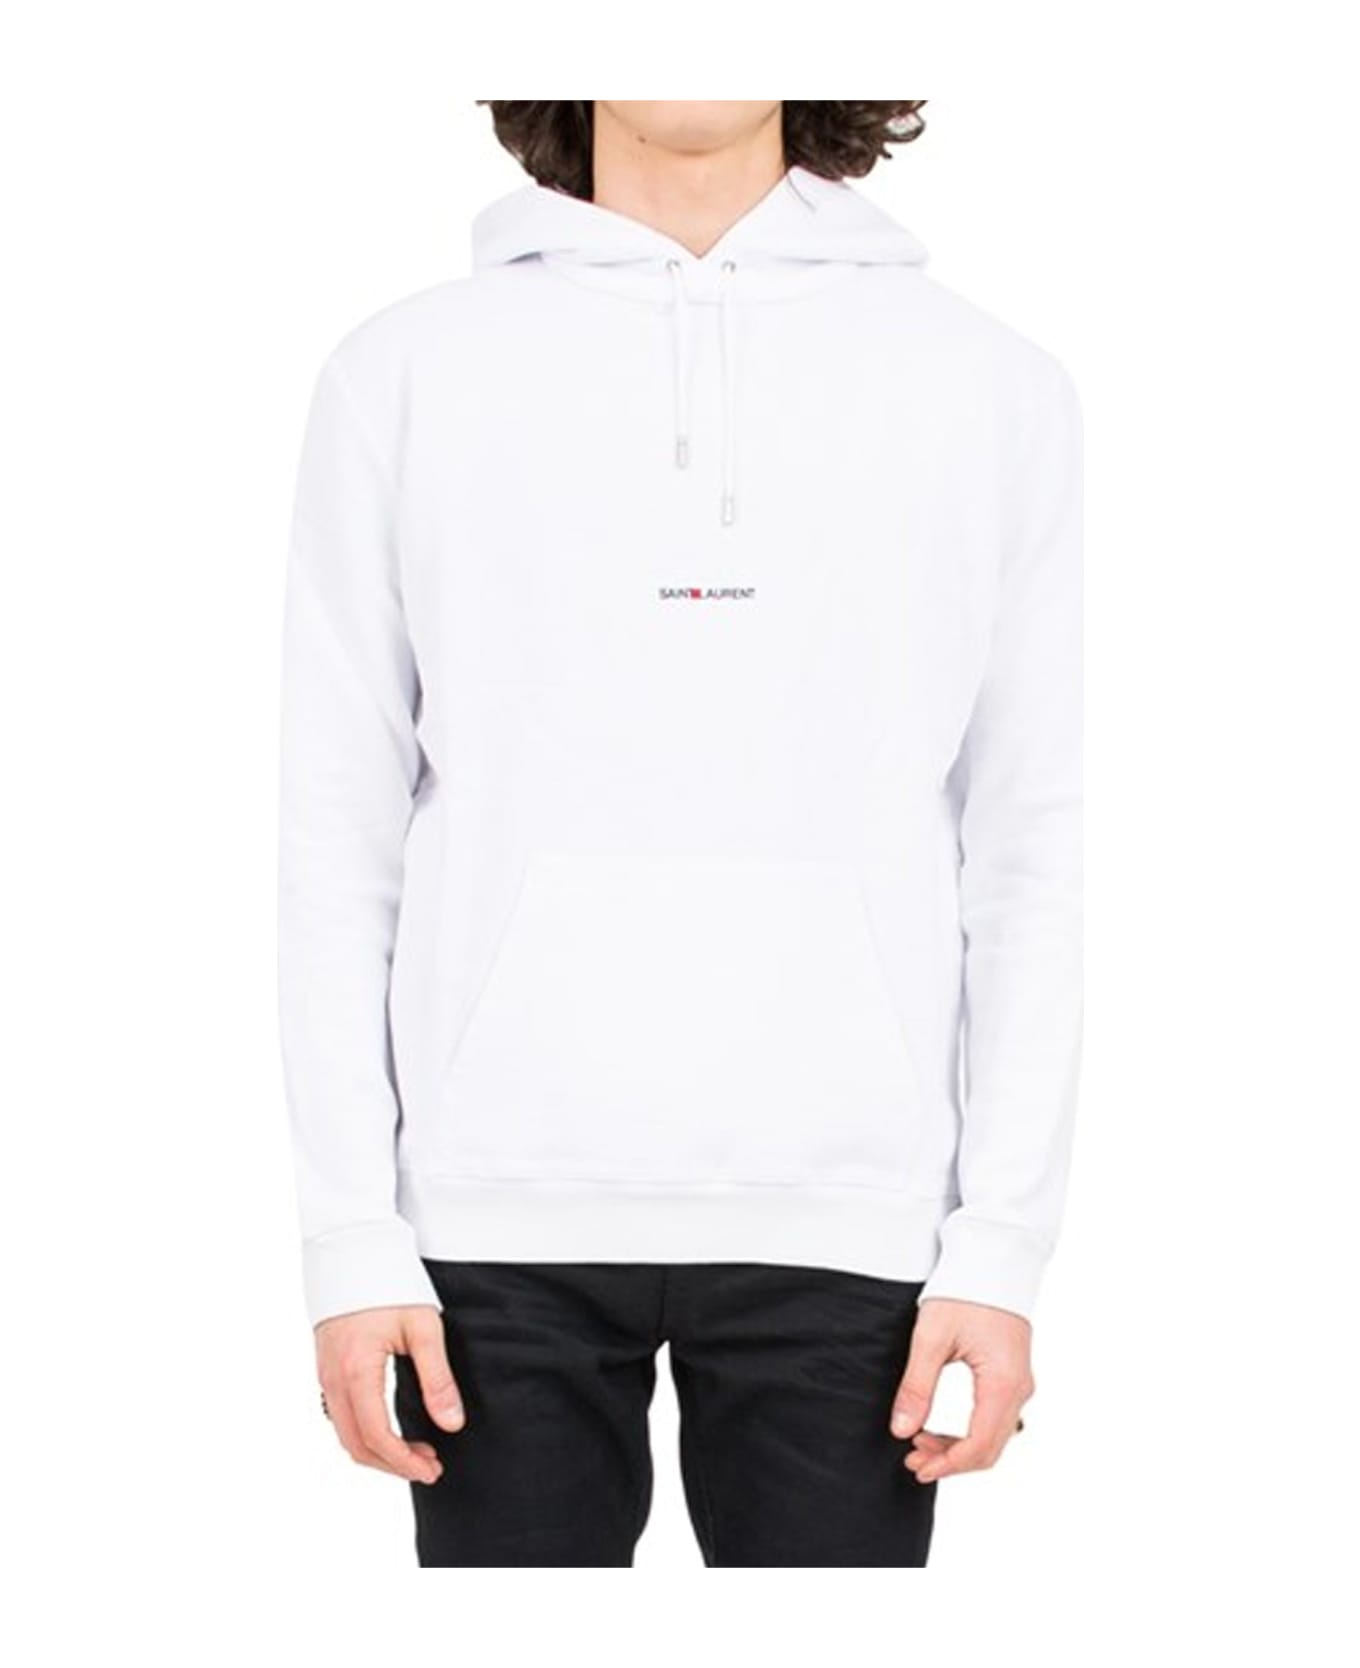 Saint Laurent Cotton Sweatshirt - White